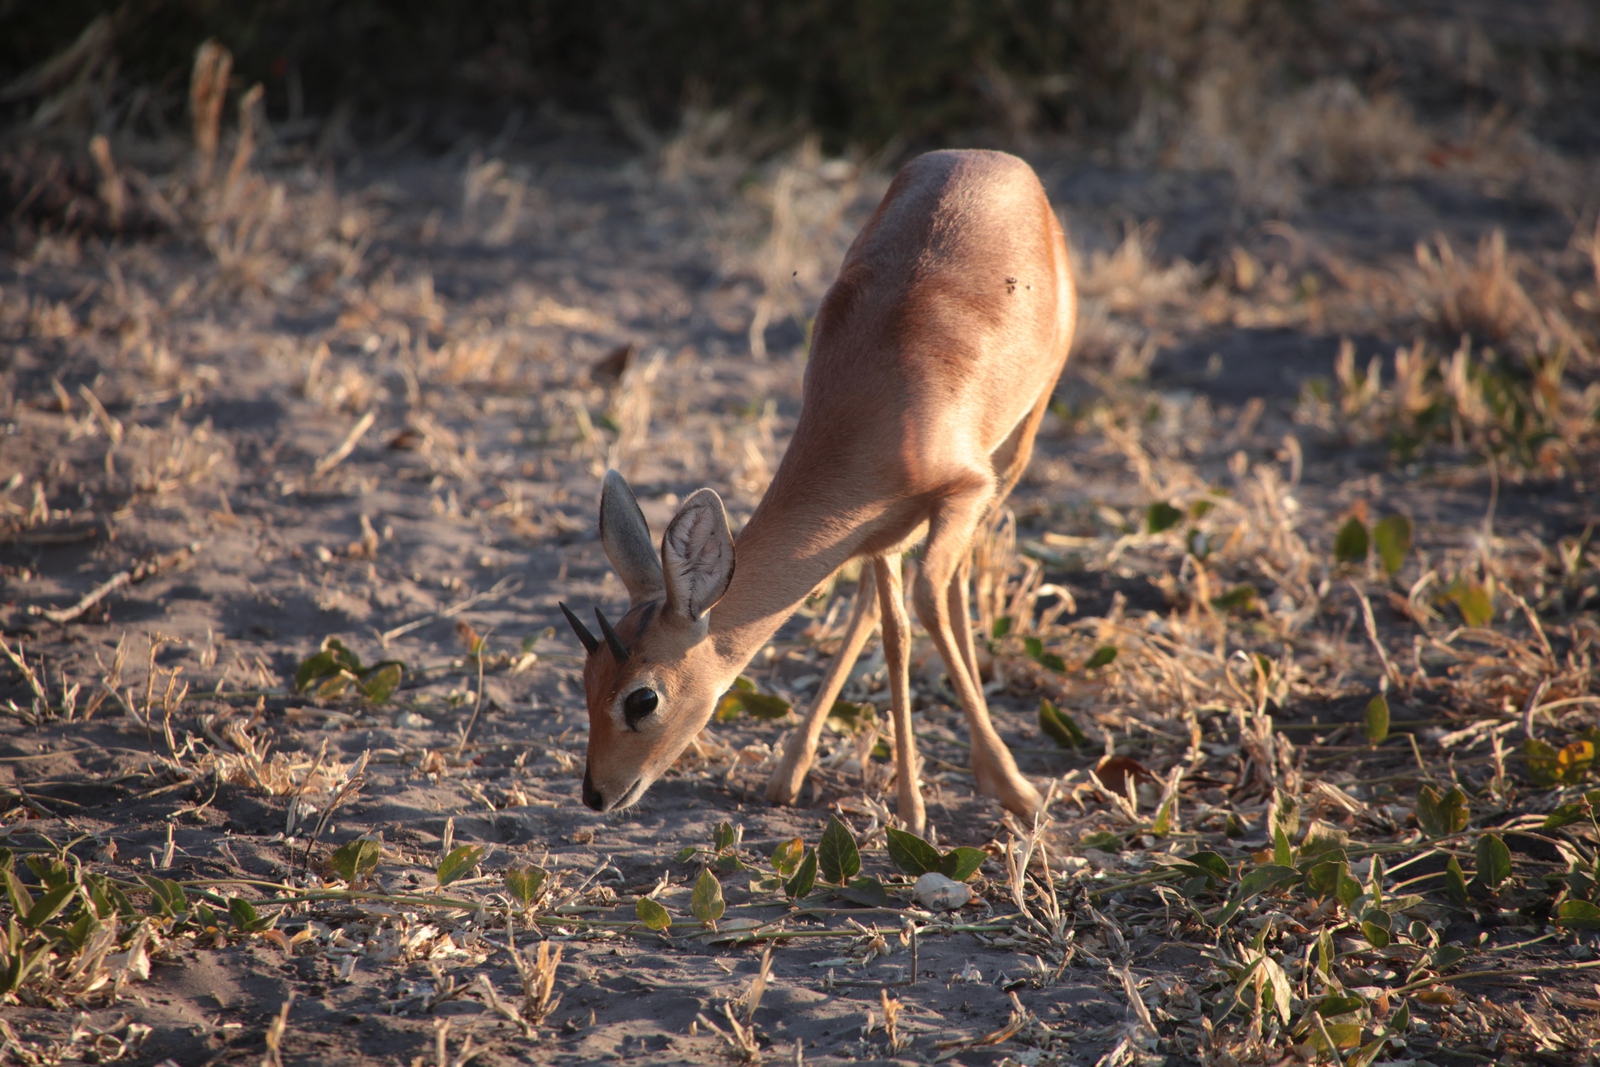 Savuti: Steenbokantilope (Raphicerus Campestris)